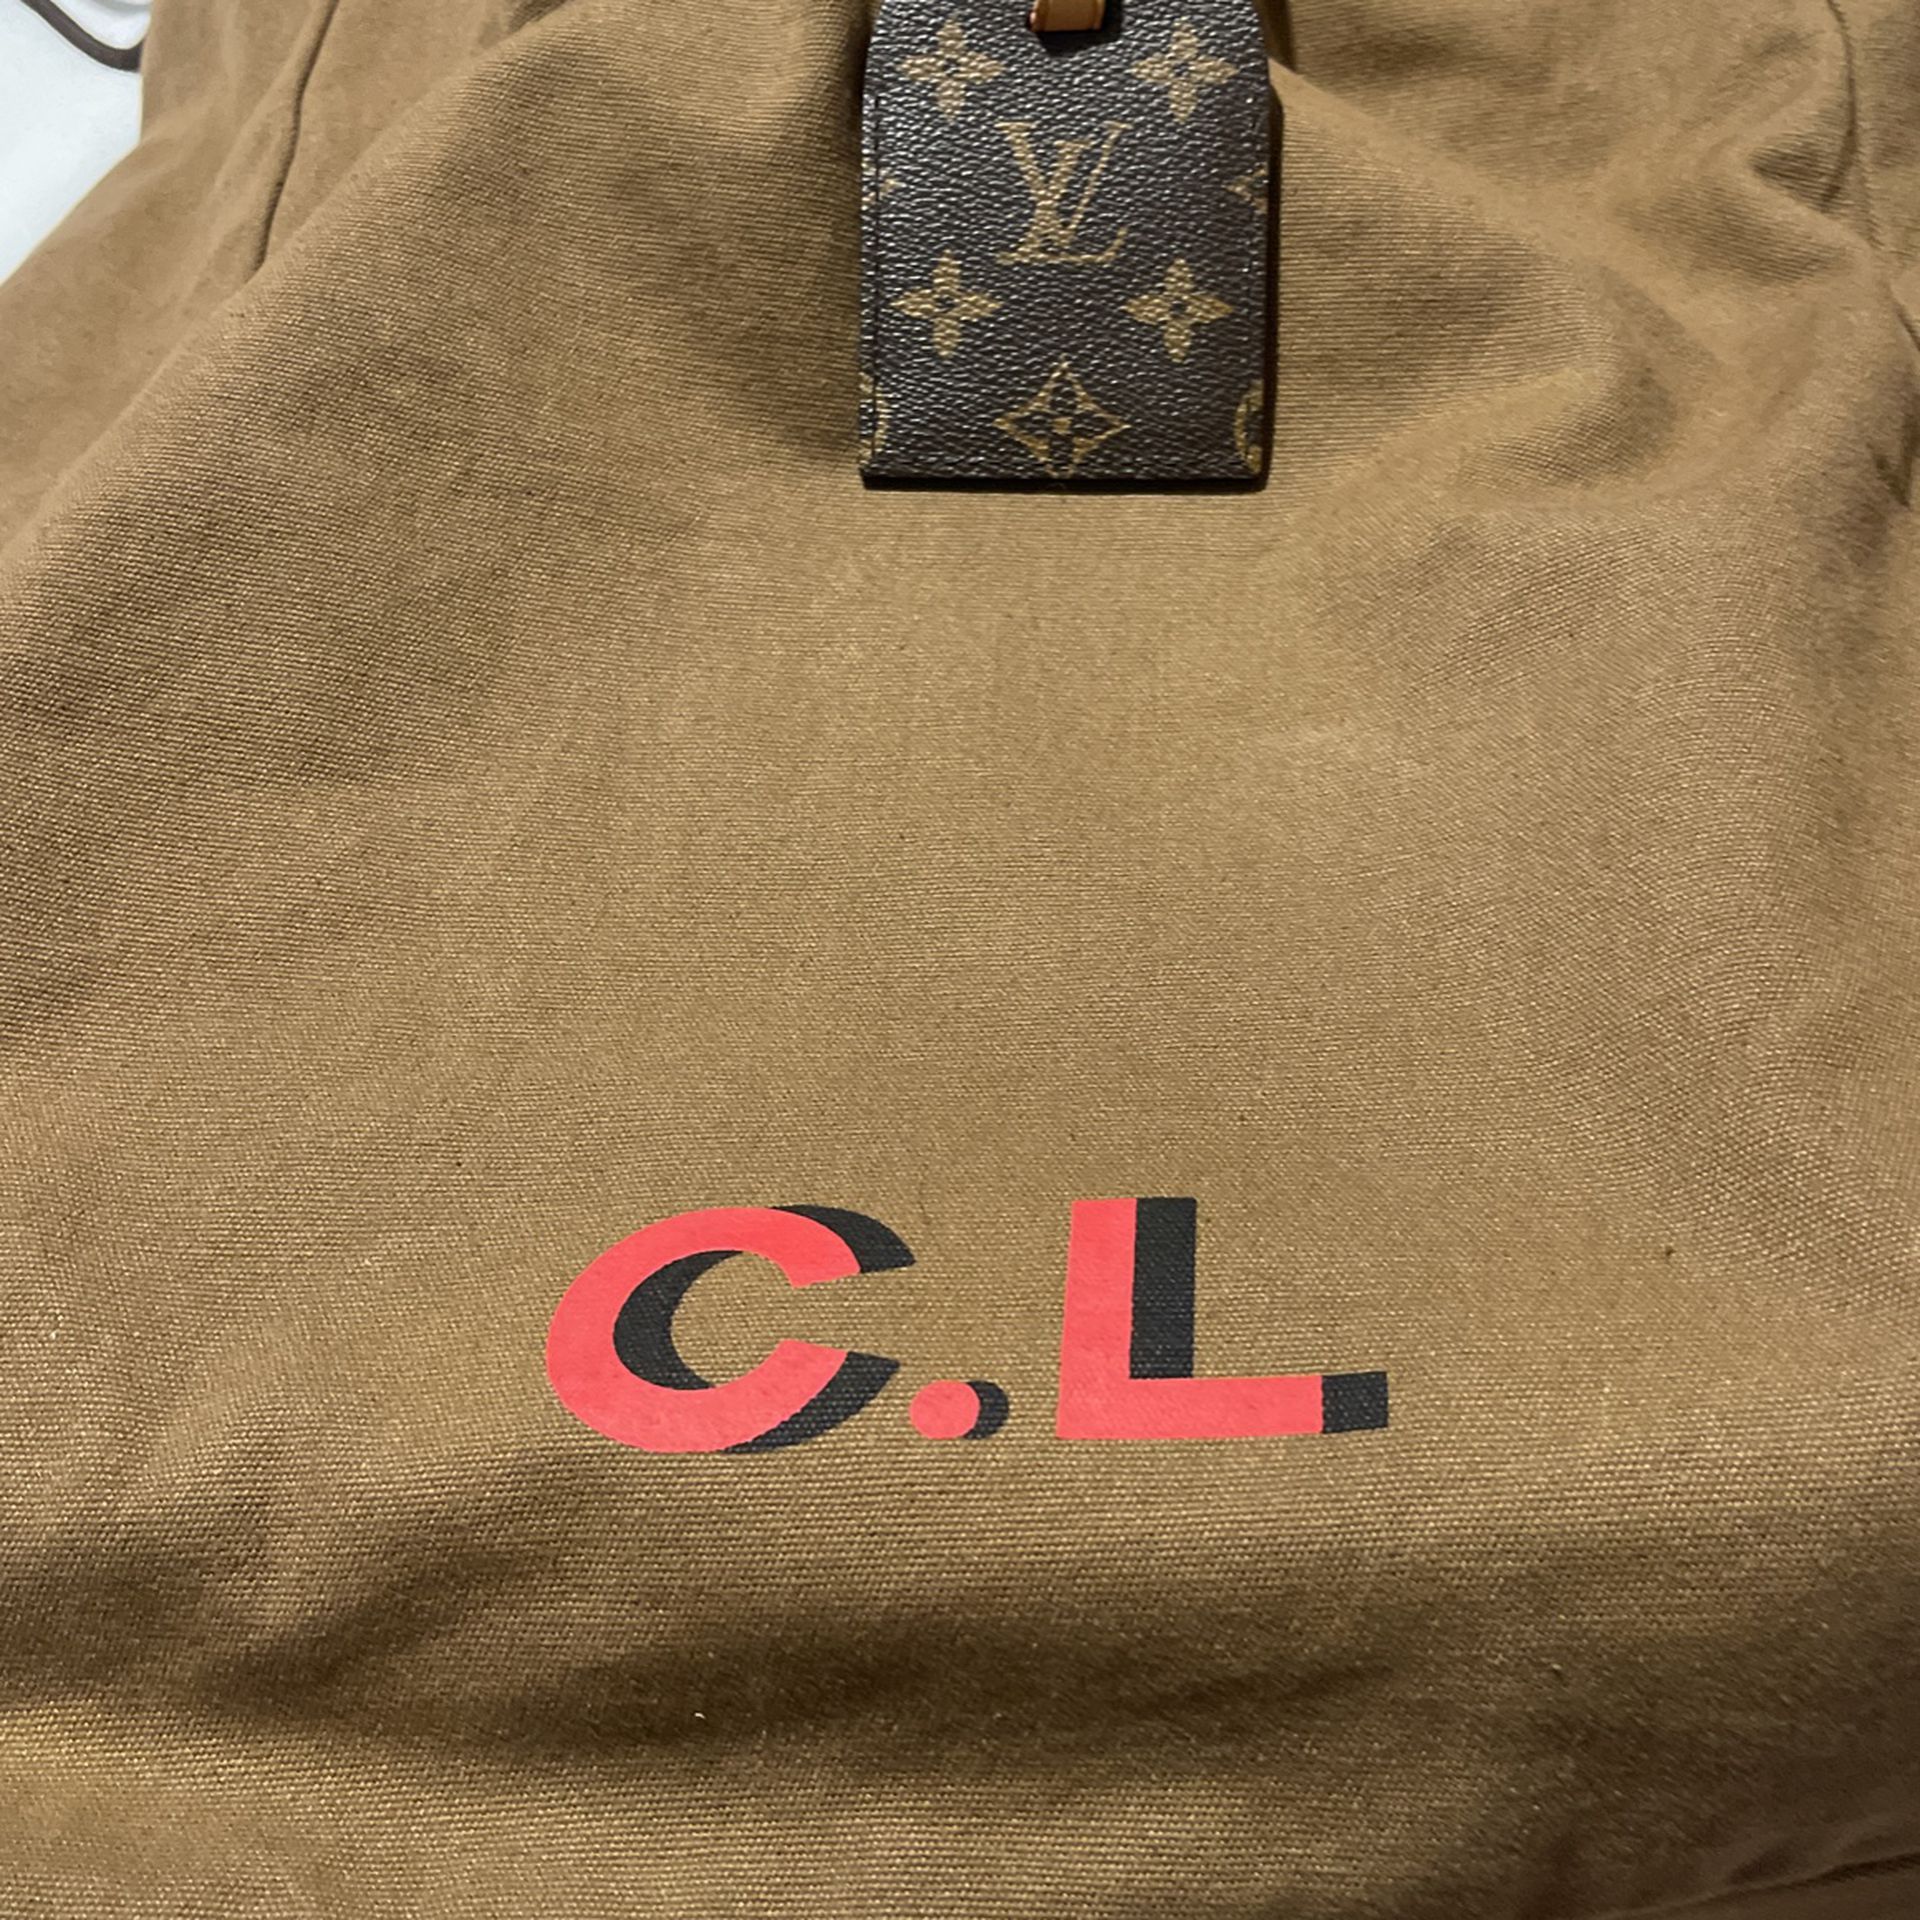 Louis Vuitton x Christian Louboutin Shopping bag – Iconics Preloved Luxury